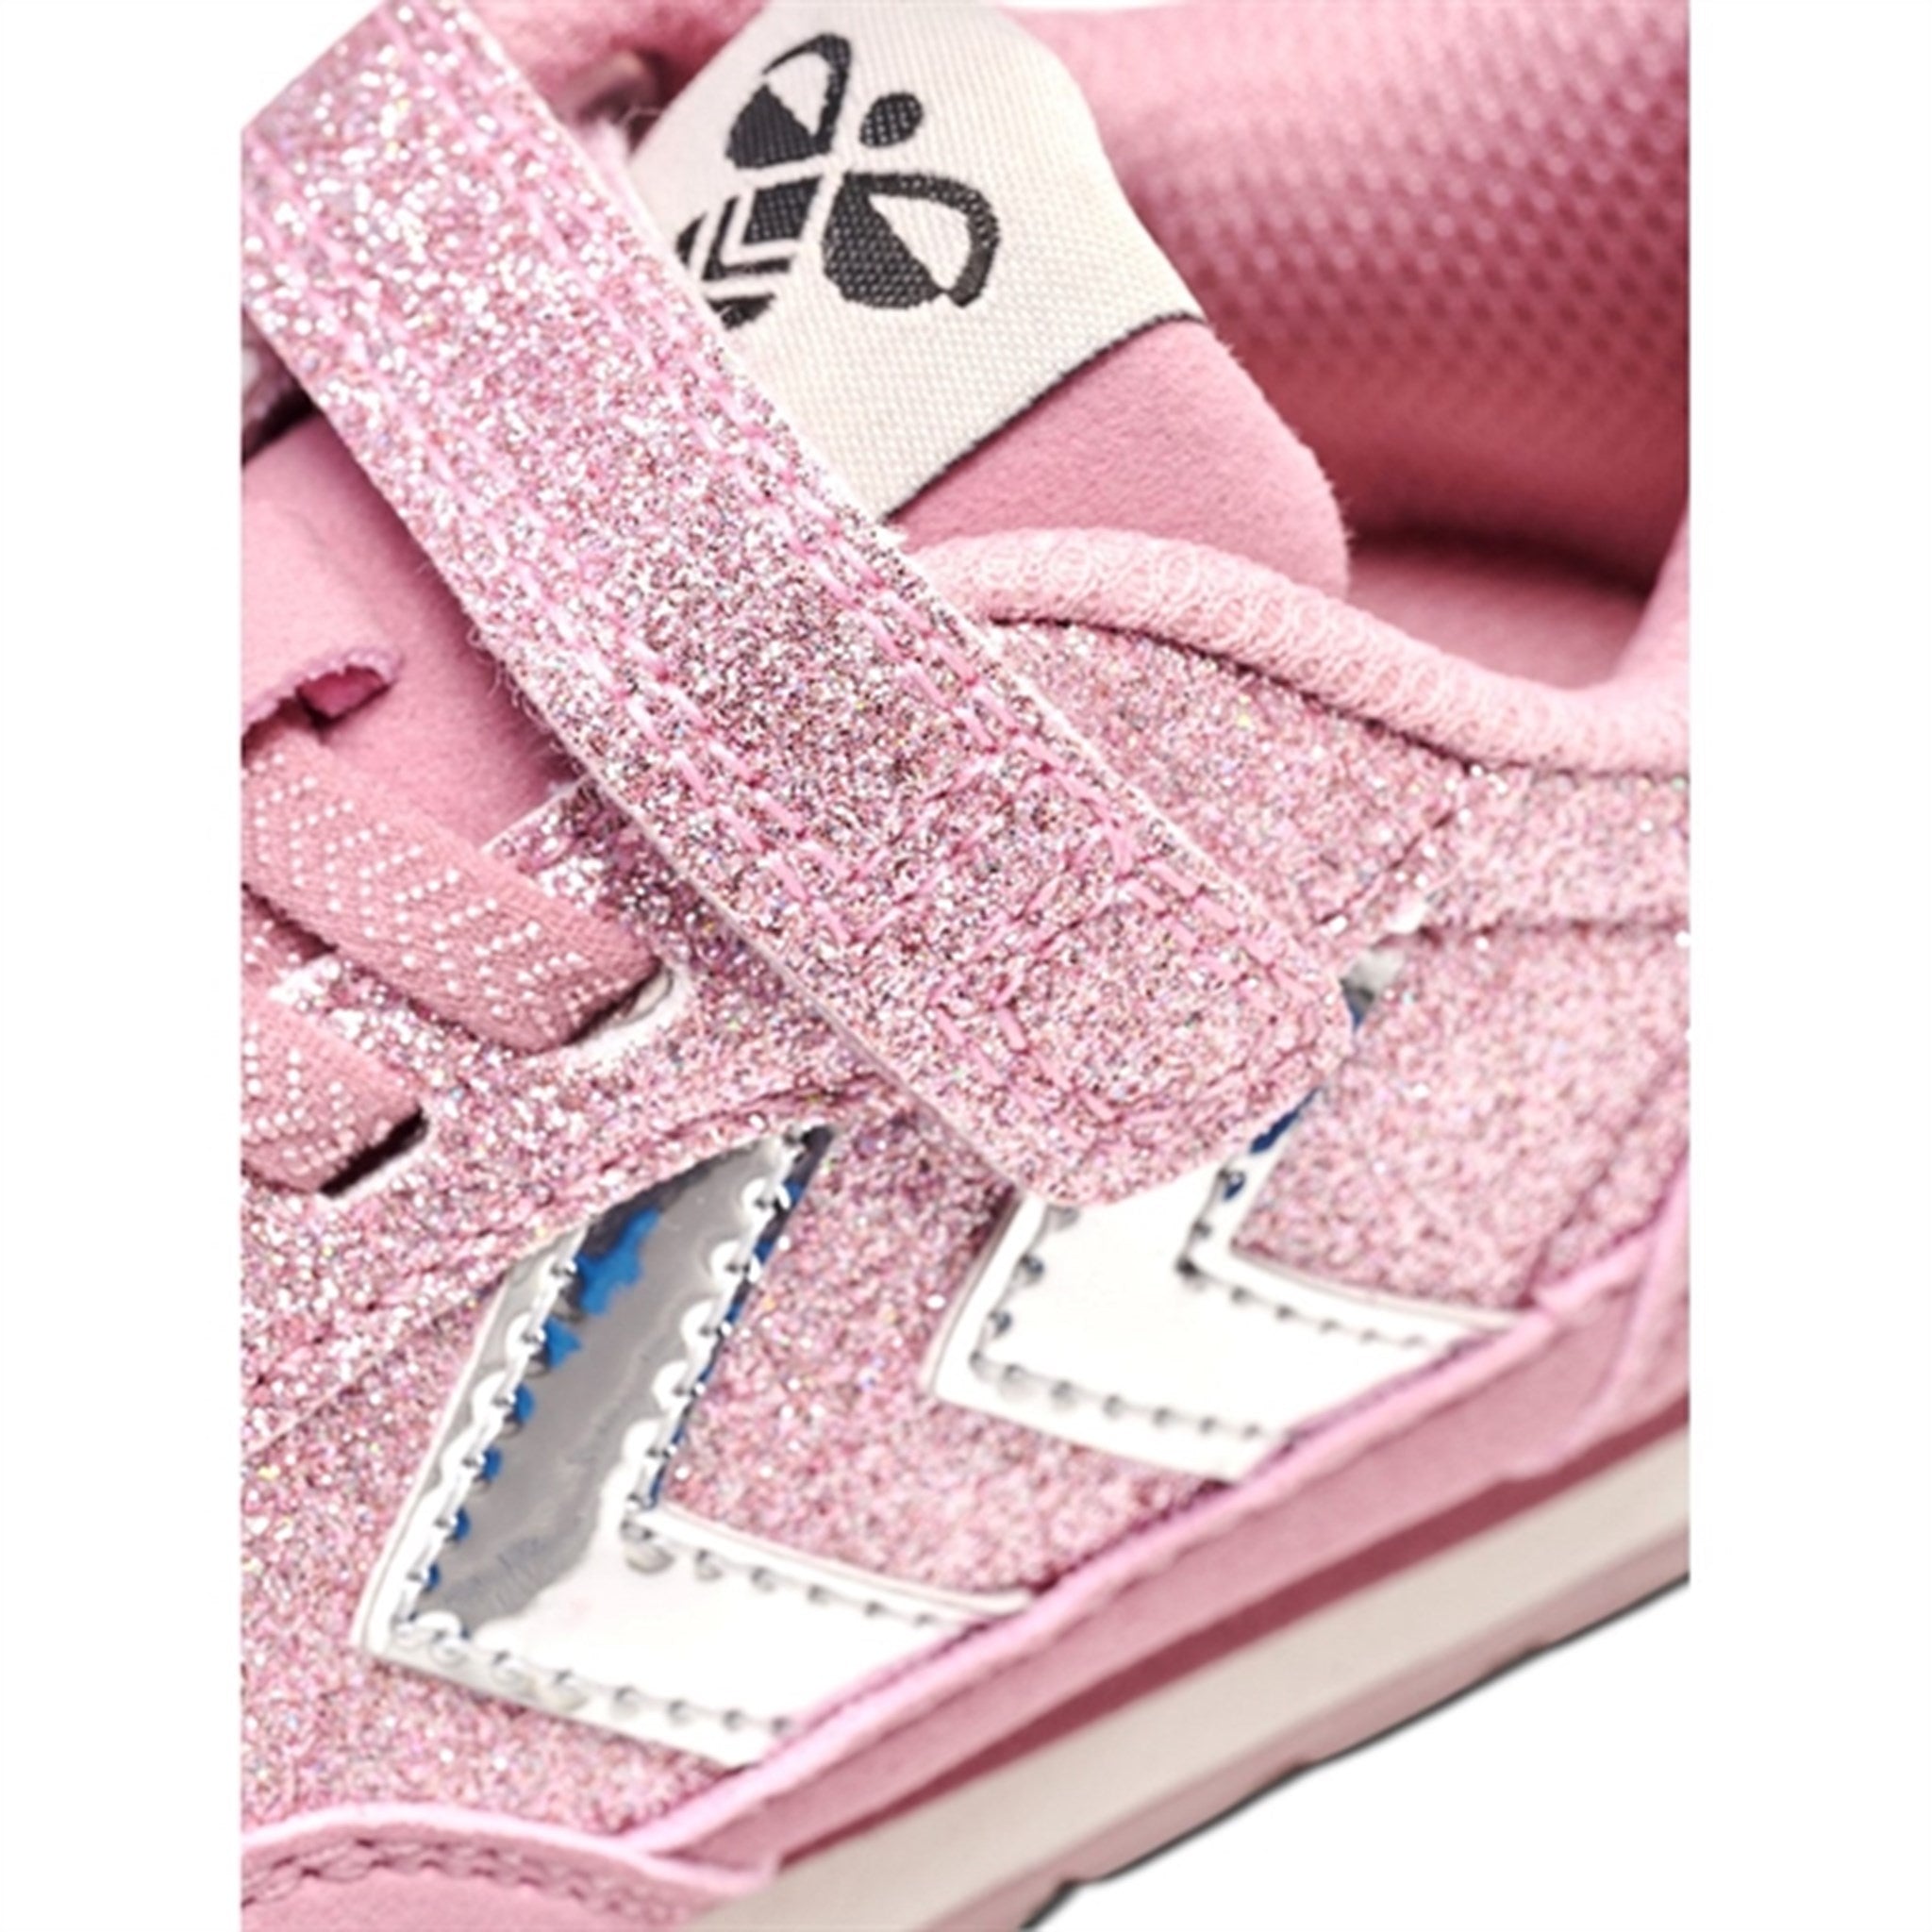 Hummel Reflex Glitter Infant Sneakers Zephyr 6